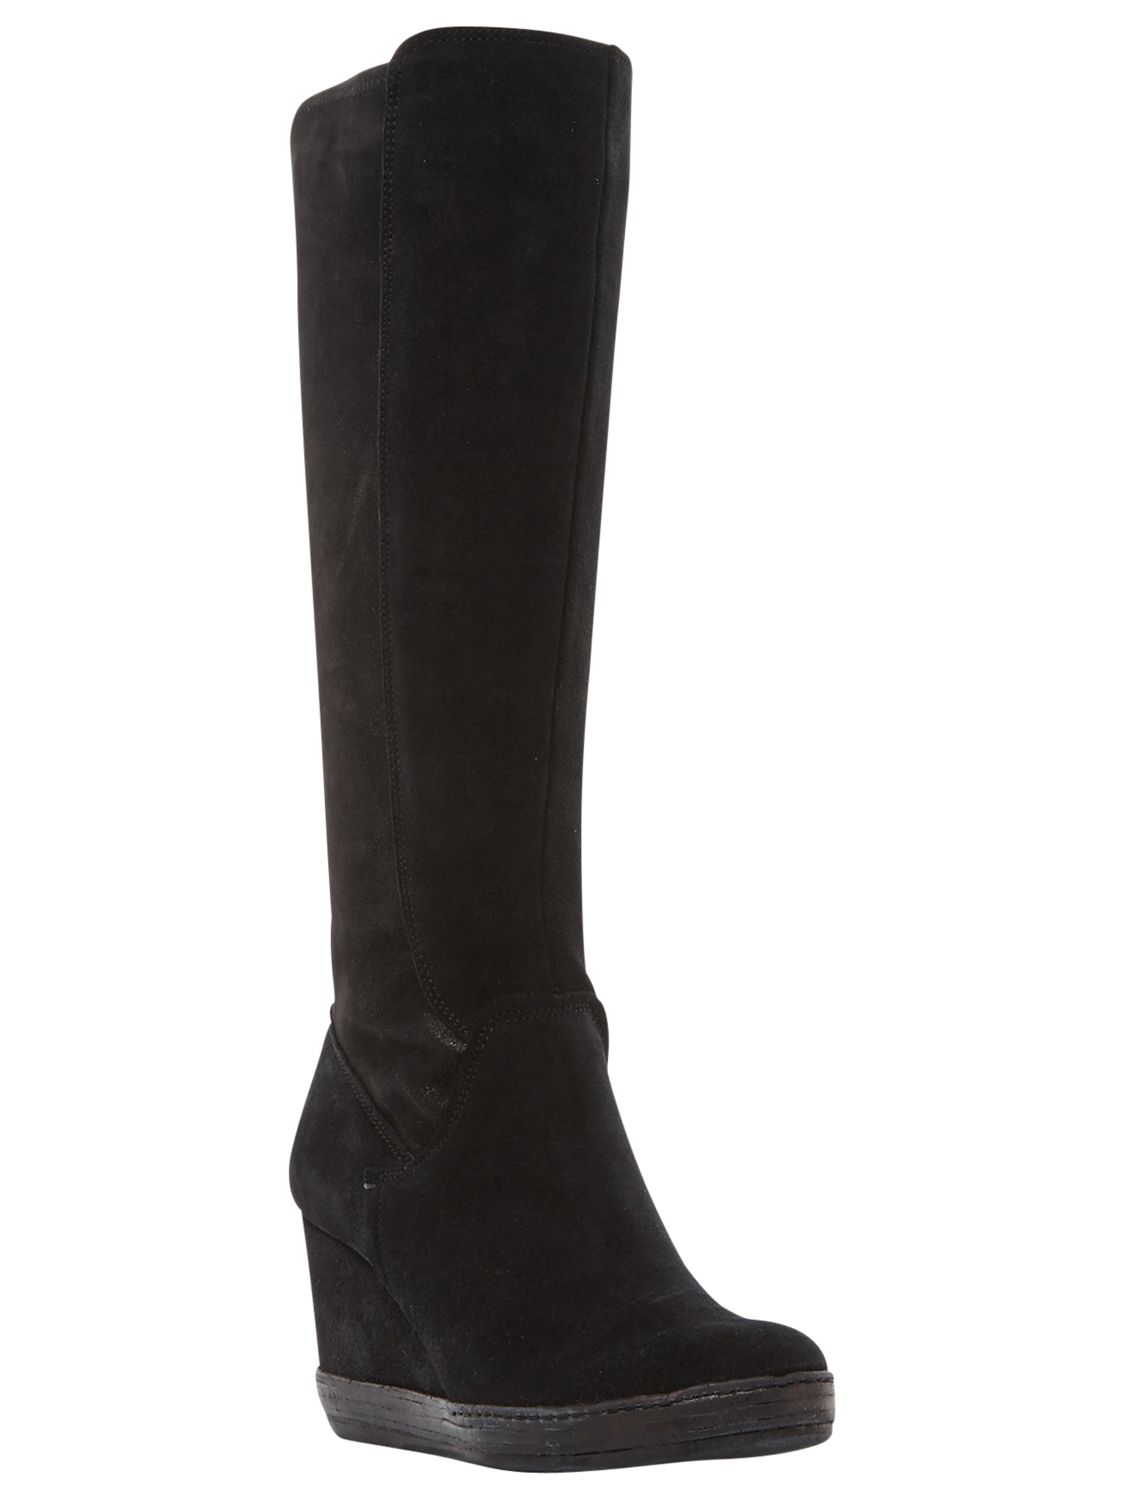 Dune Vera Wedge Heeled Knee High Boots, Black, 7